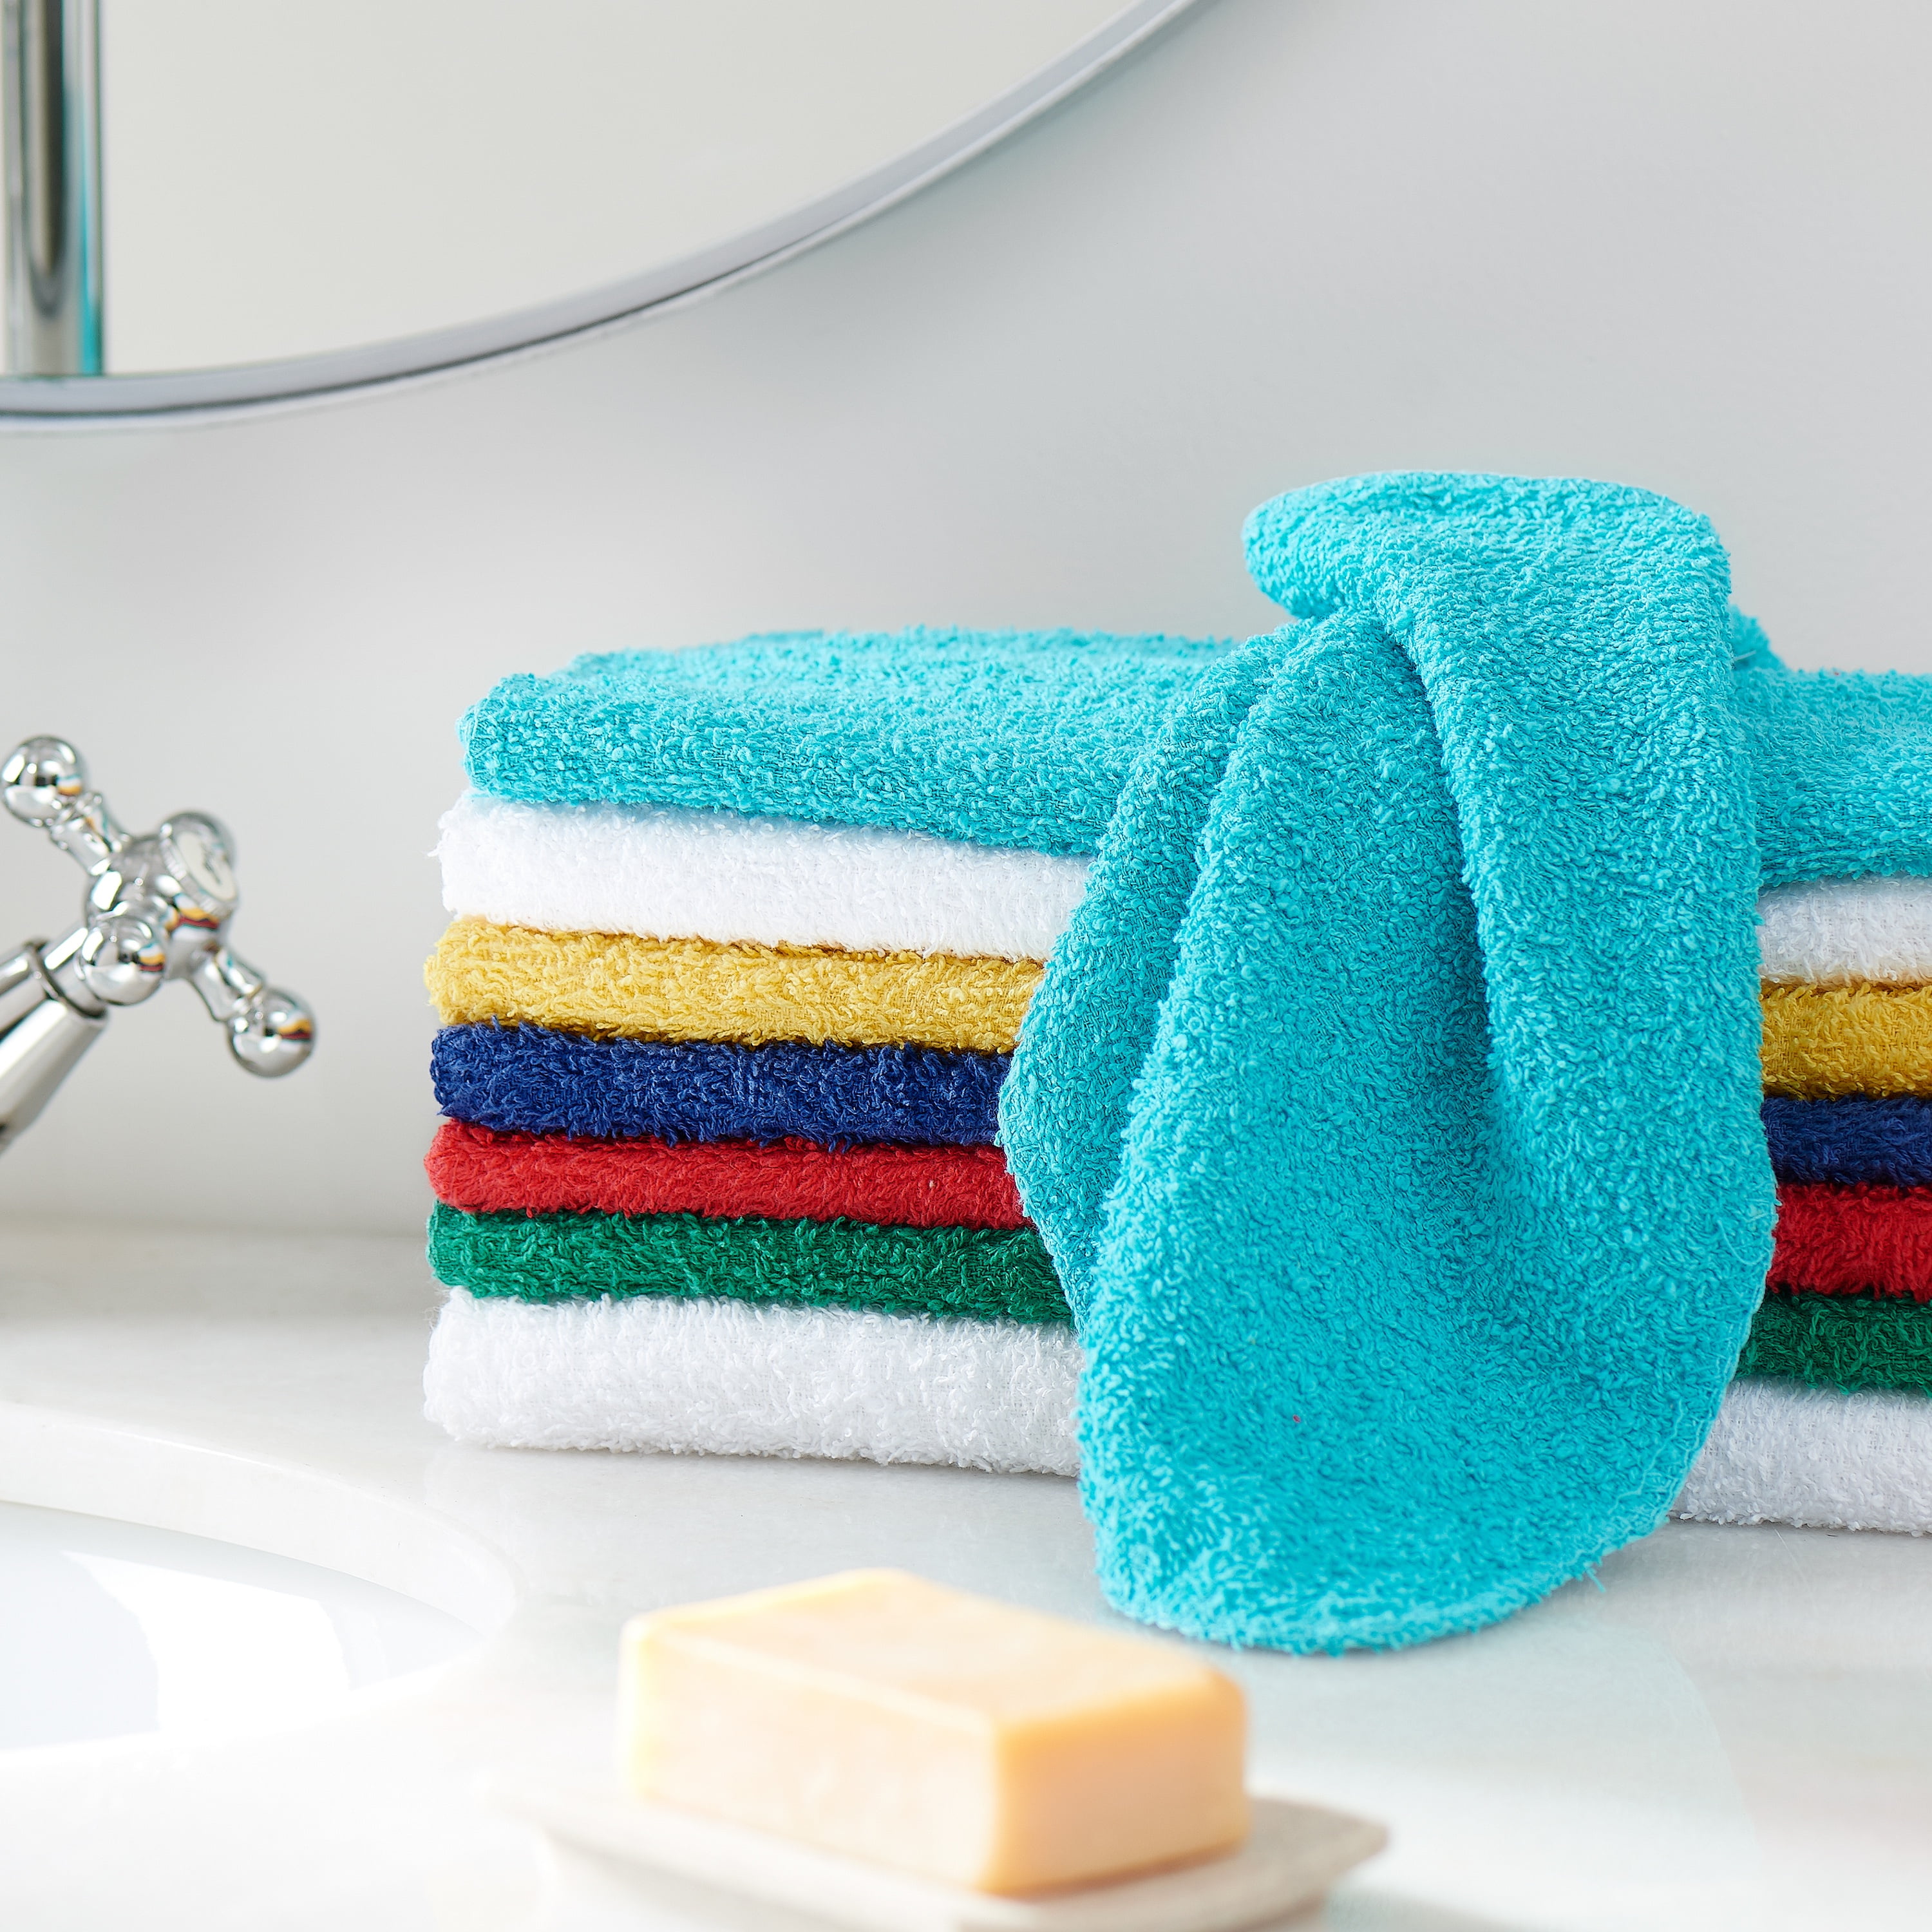  Black - Bath Washcloths / Bathroom Towels: Home & Kitchen